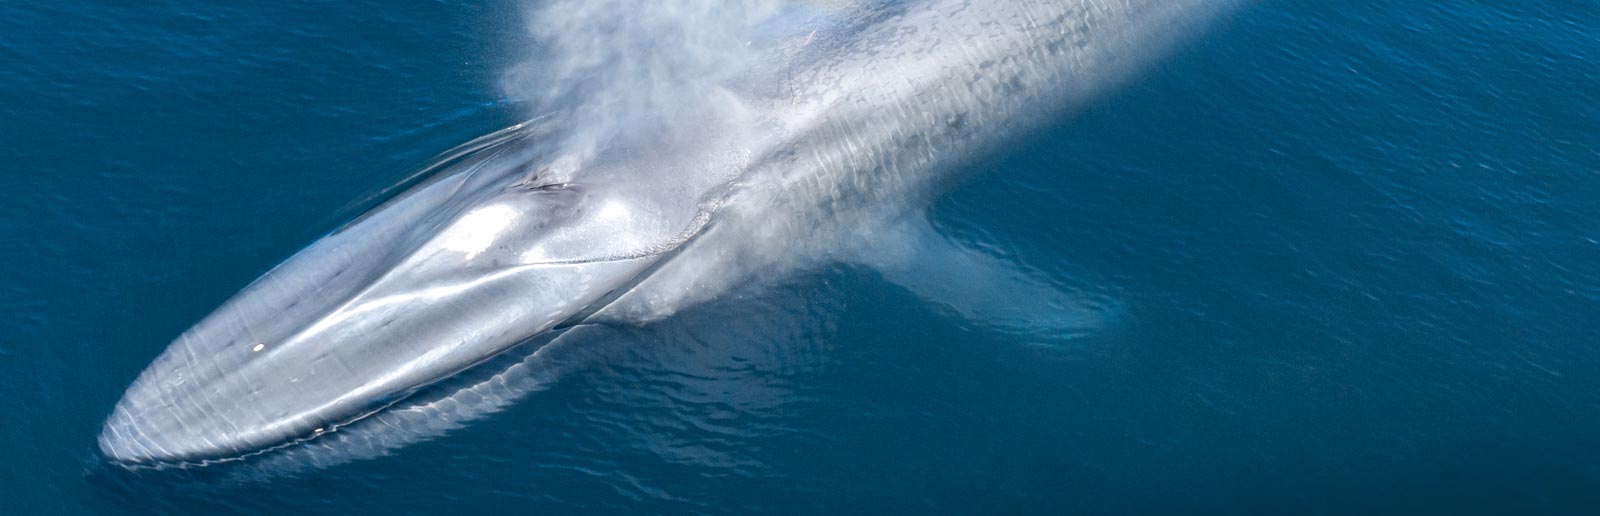 Santa Cruz Island - Spouting Blue Whale Looking Silver in the Sun